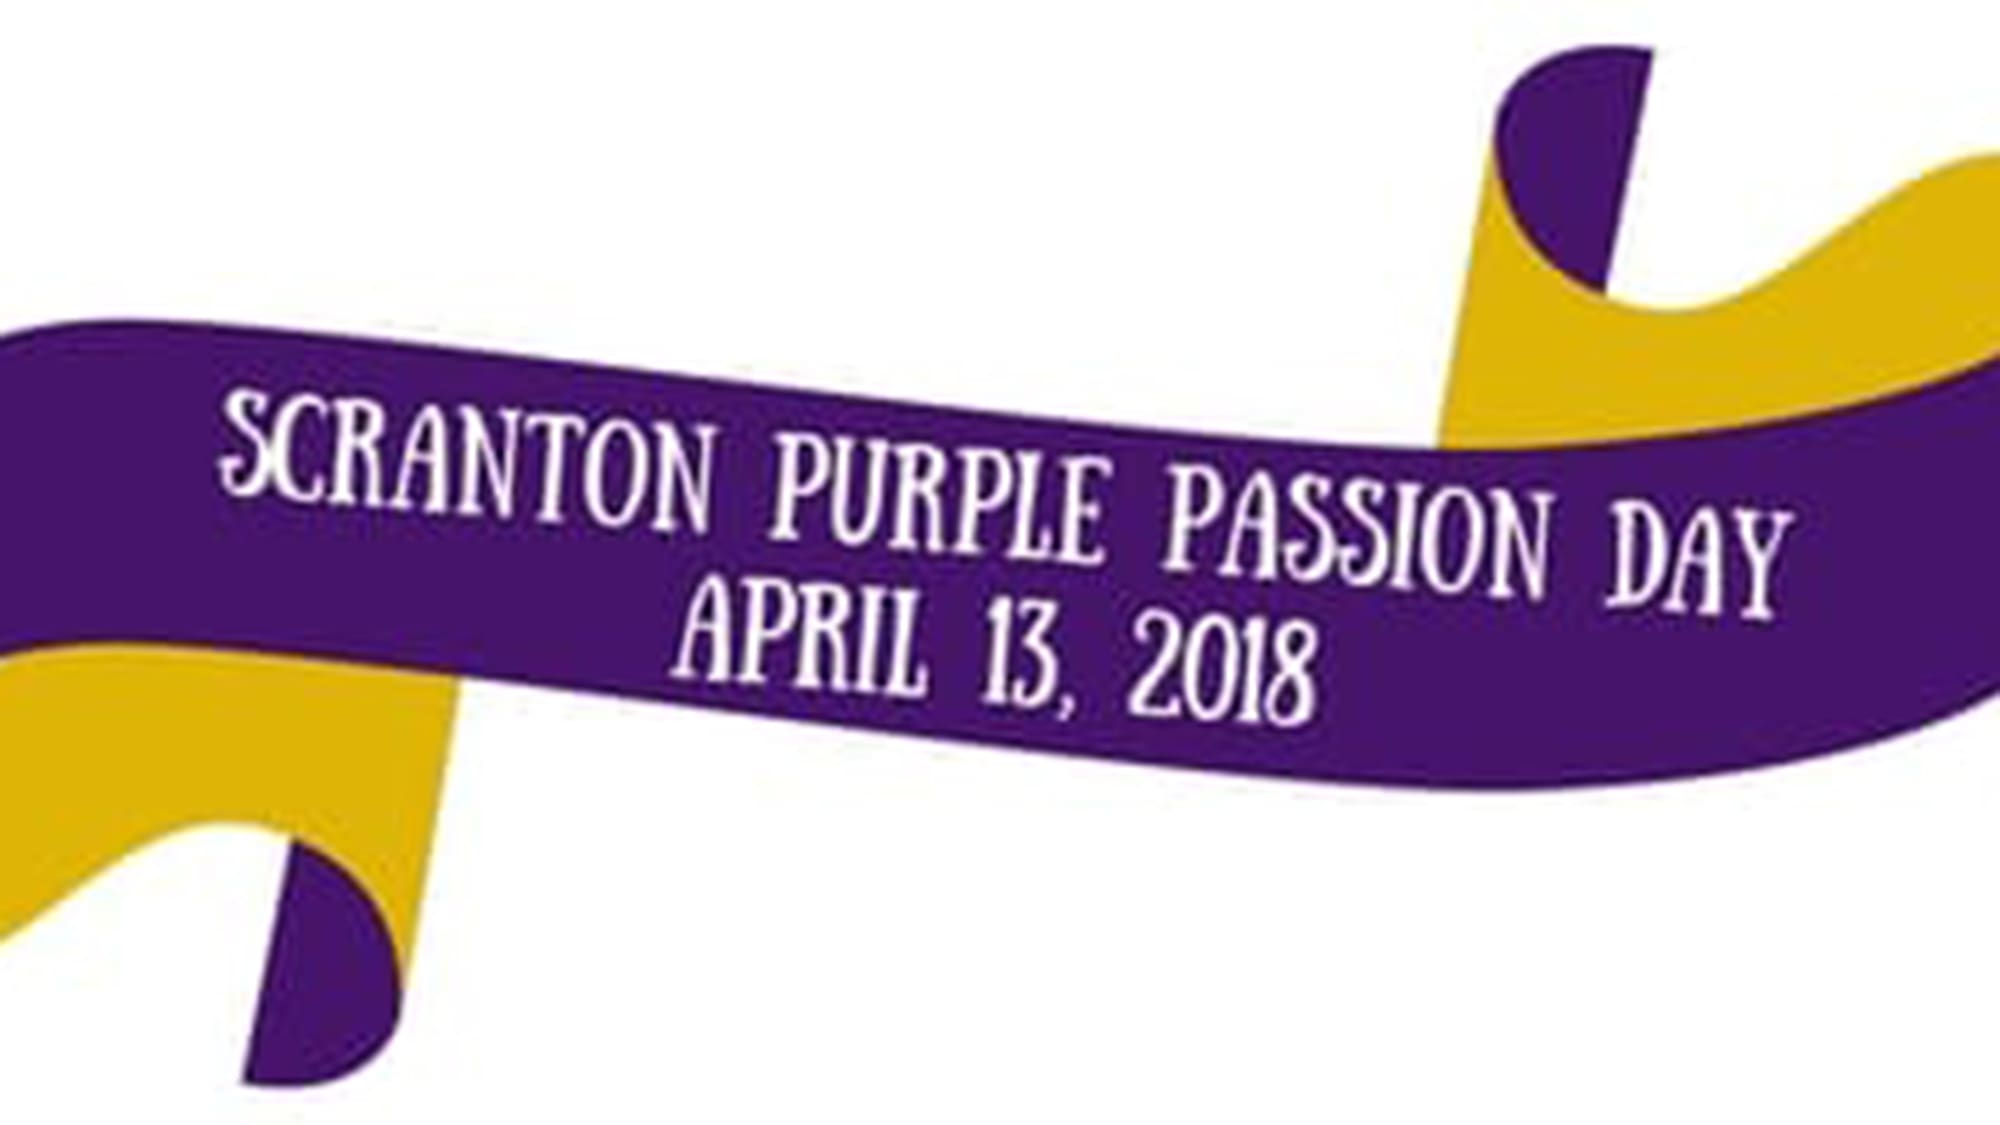 University To Hold Scranton Purple Passion Day April 13